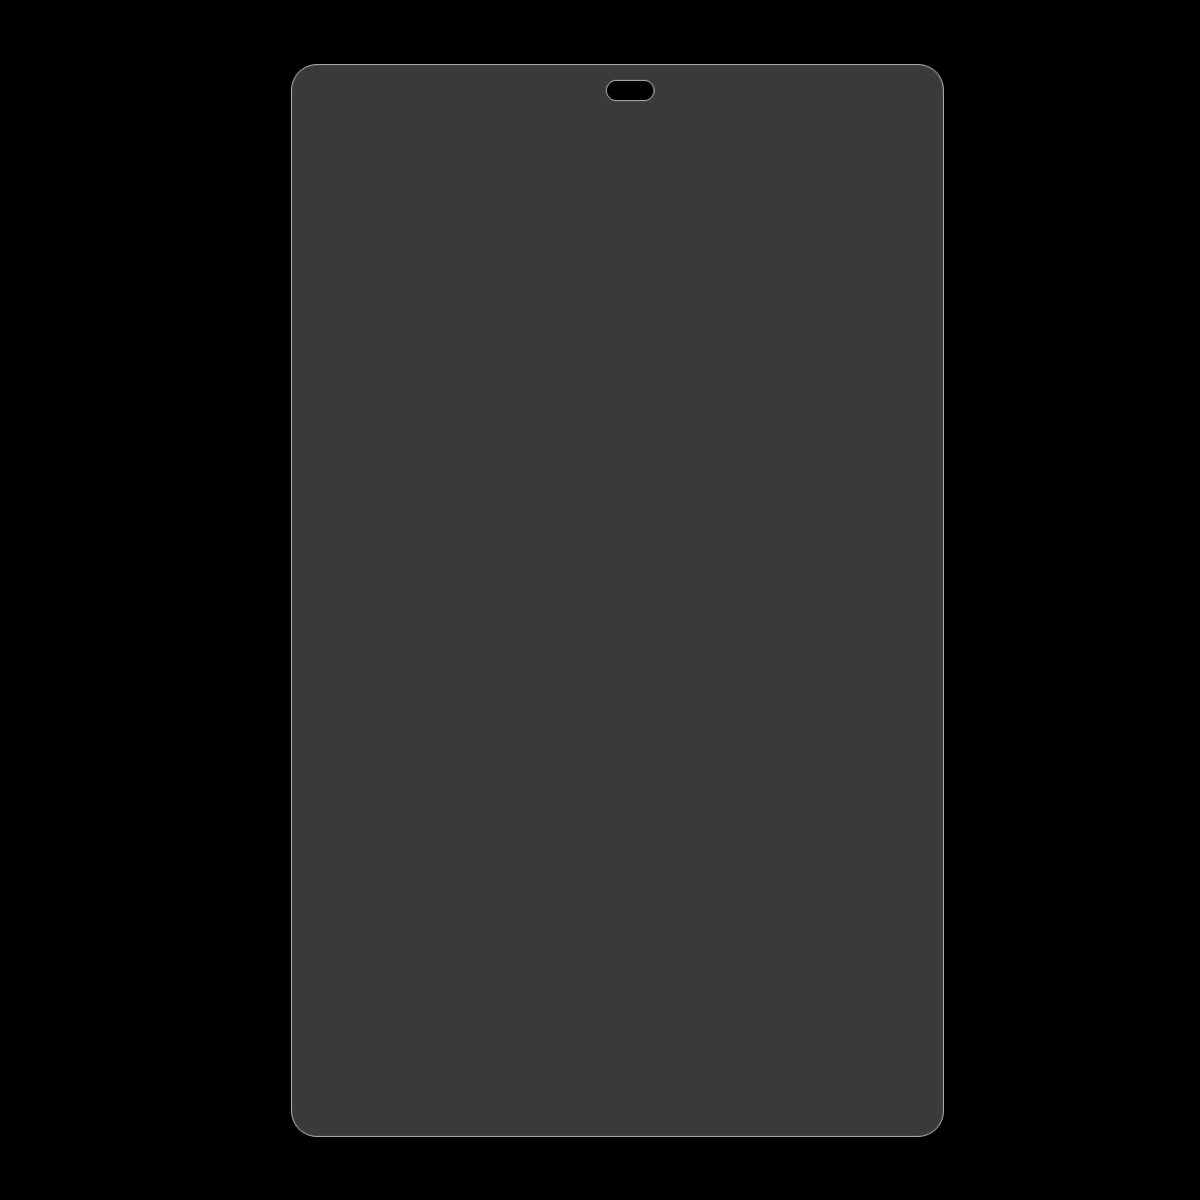 Enkay Anti-scratch High Definition Soft Tablet Screen Protector for Galaxy Tab A 10.1 2019